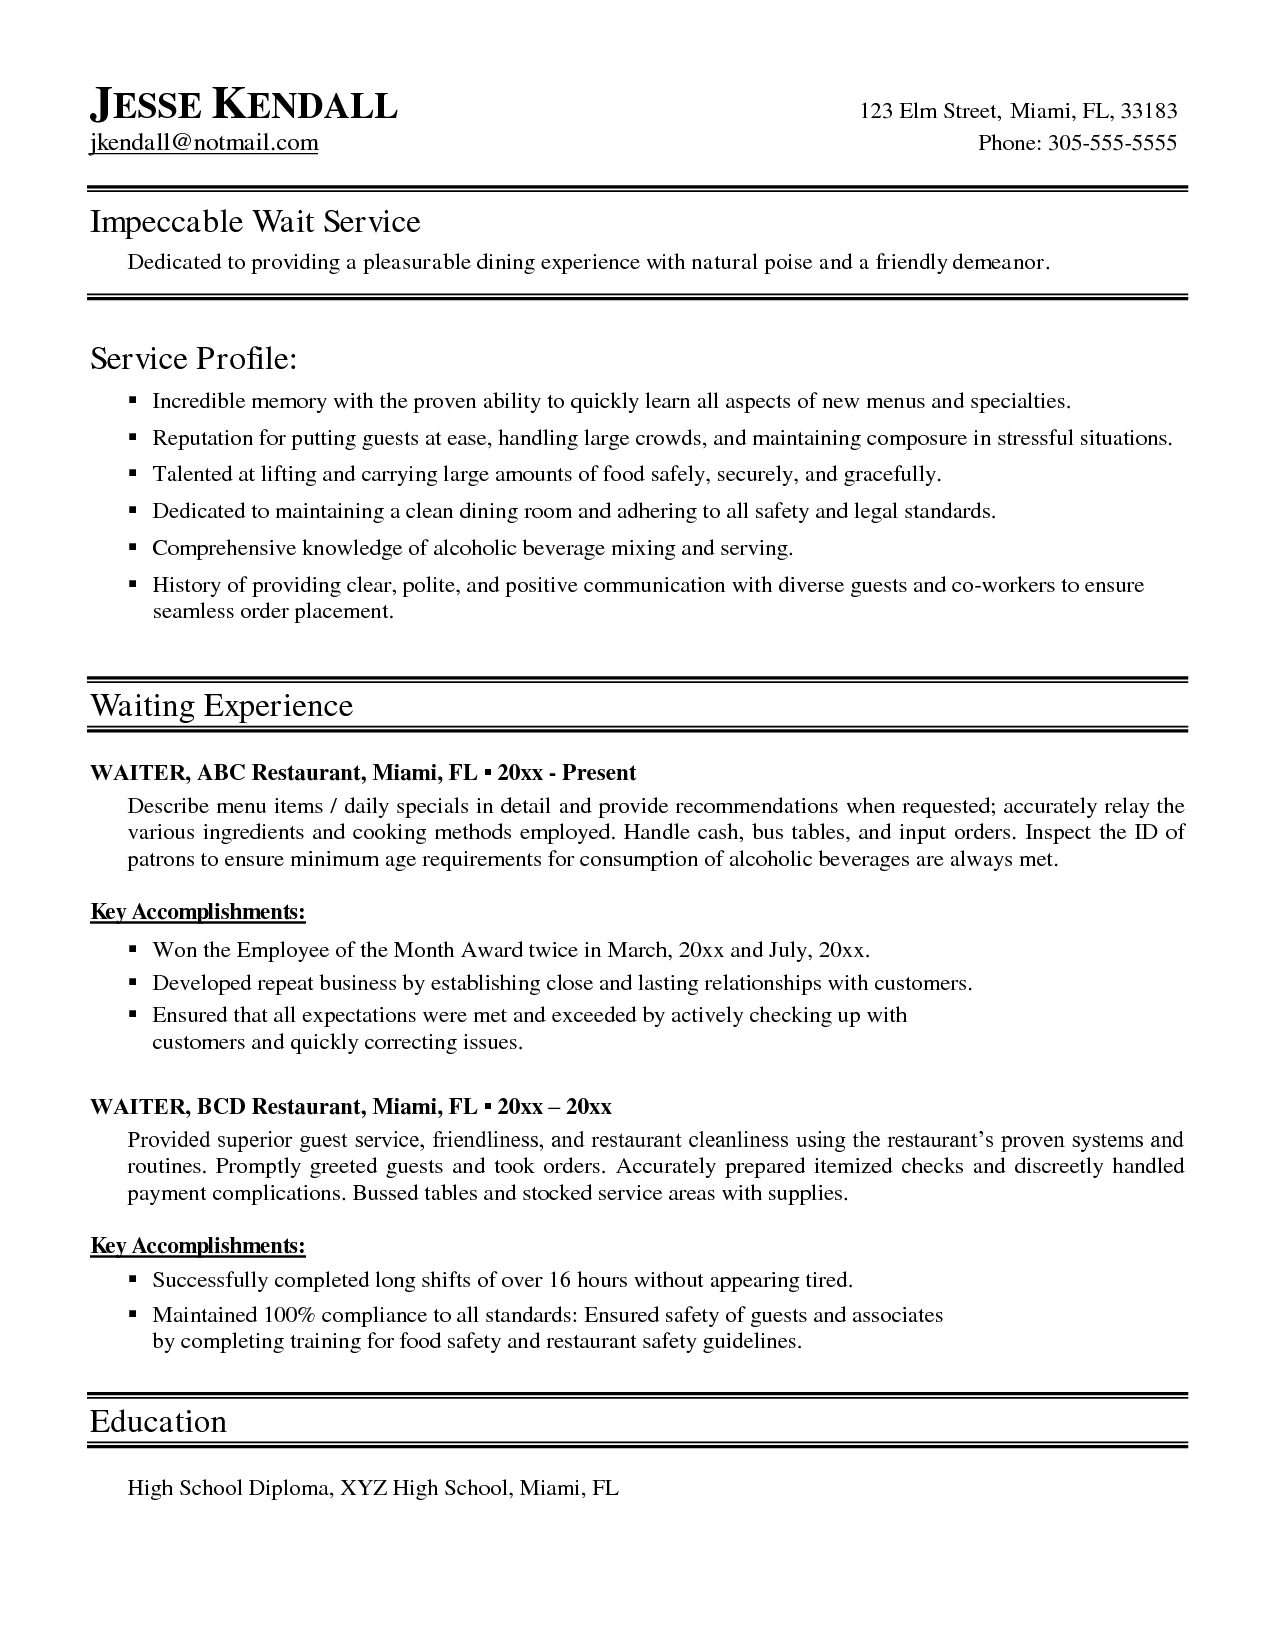 Resume Examples Waitress 